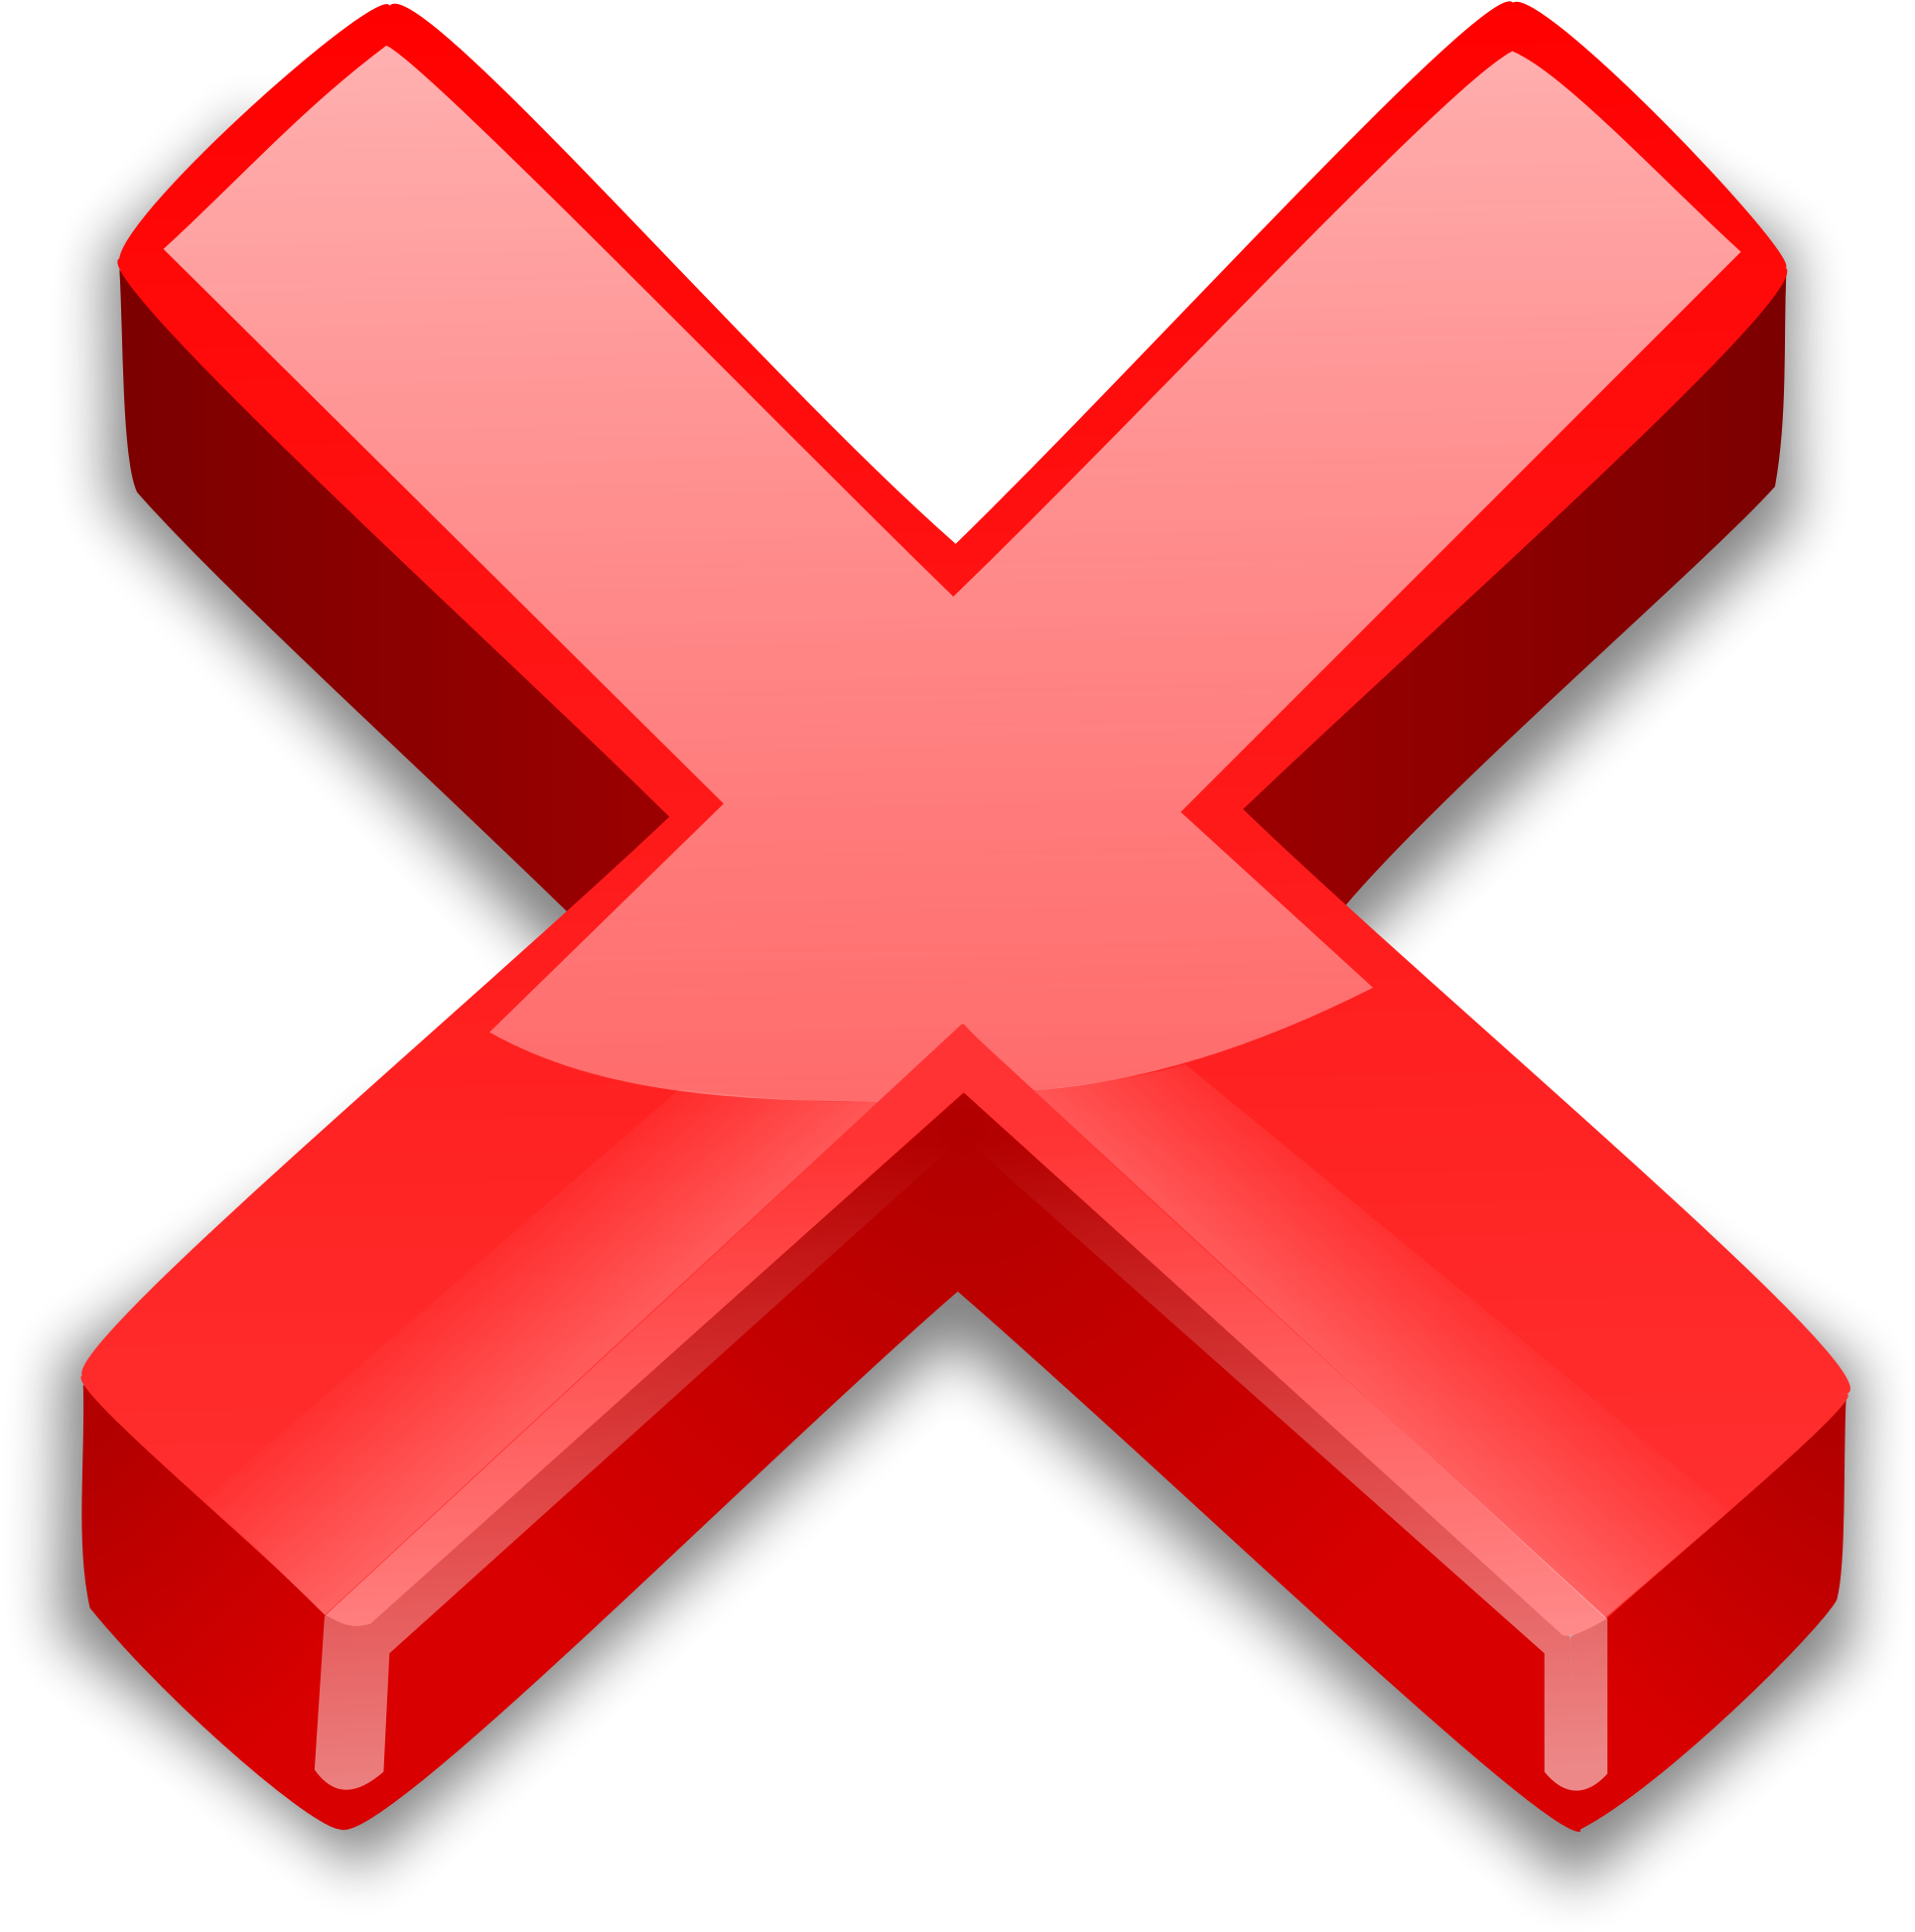 Image x icon. Крестик символ. Красный крестик. Крестик значок. Крестик нет.